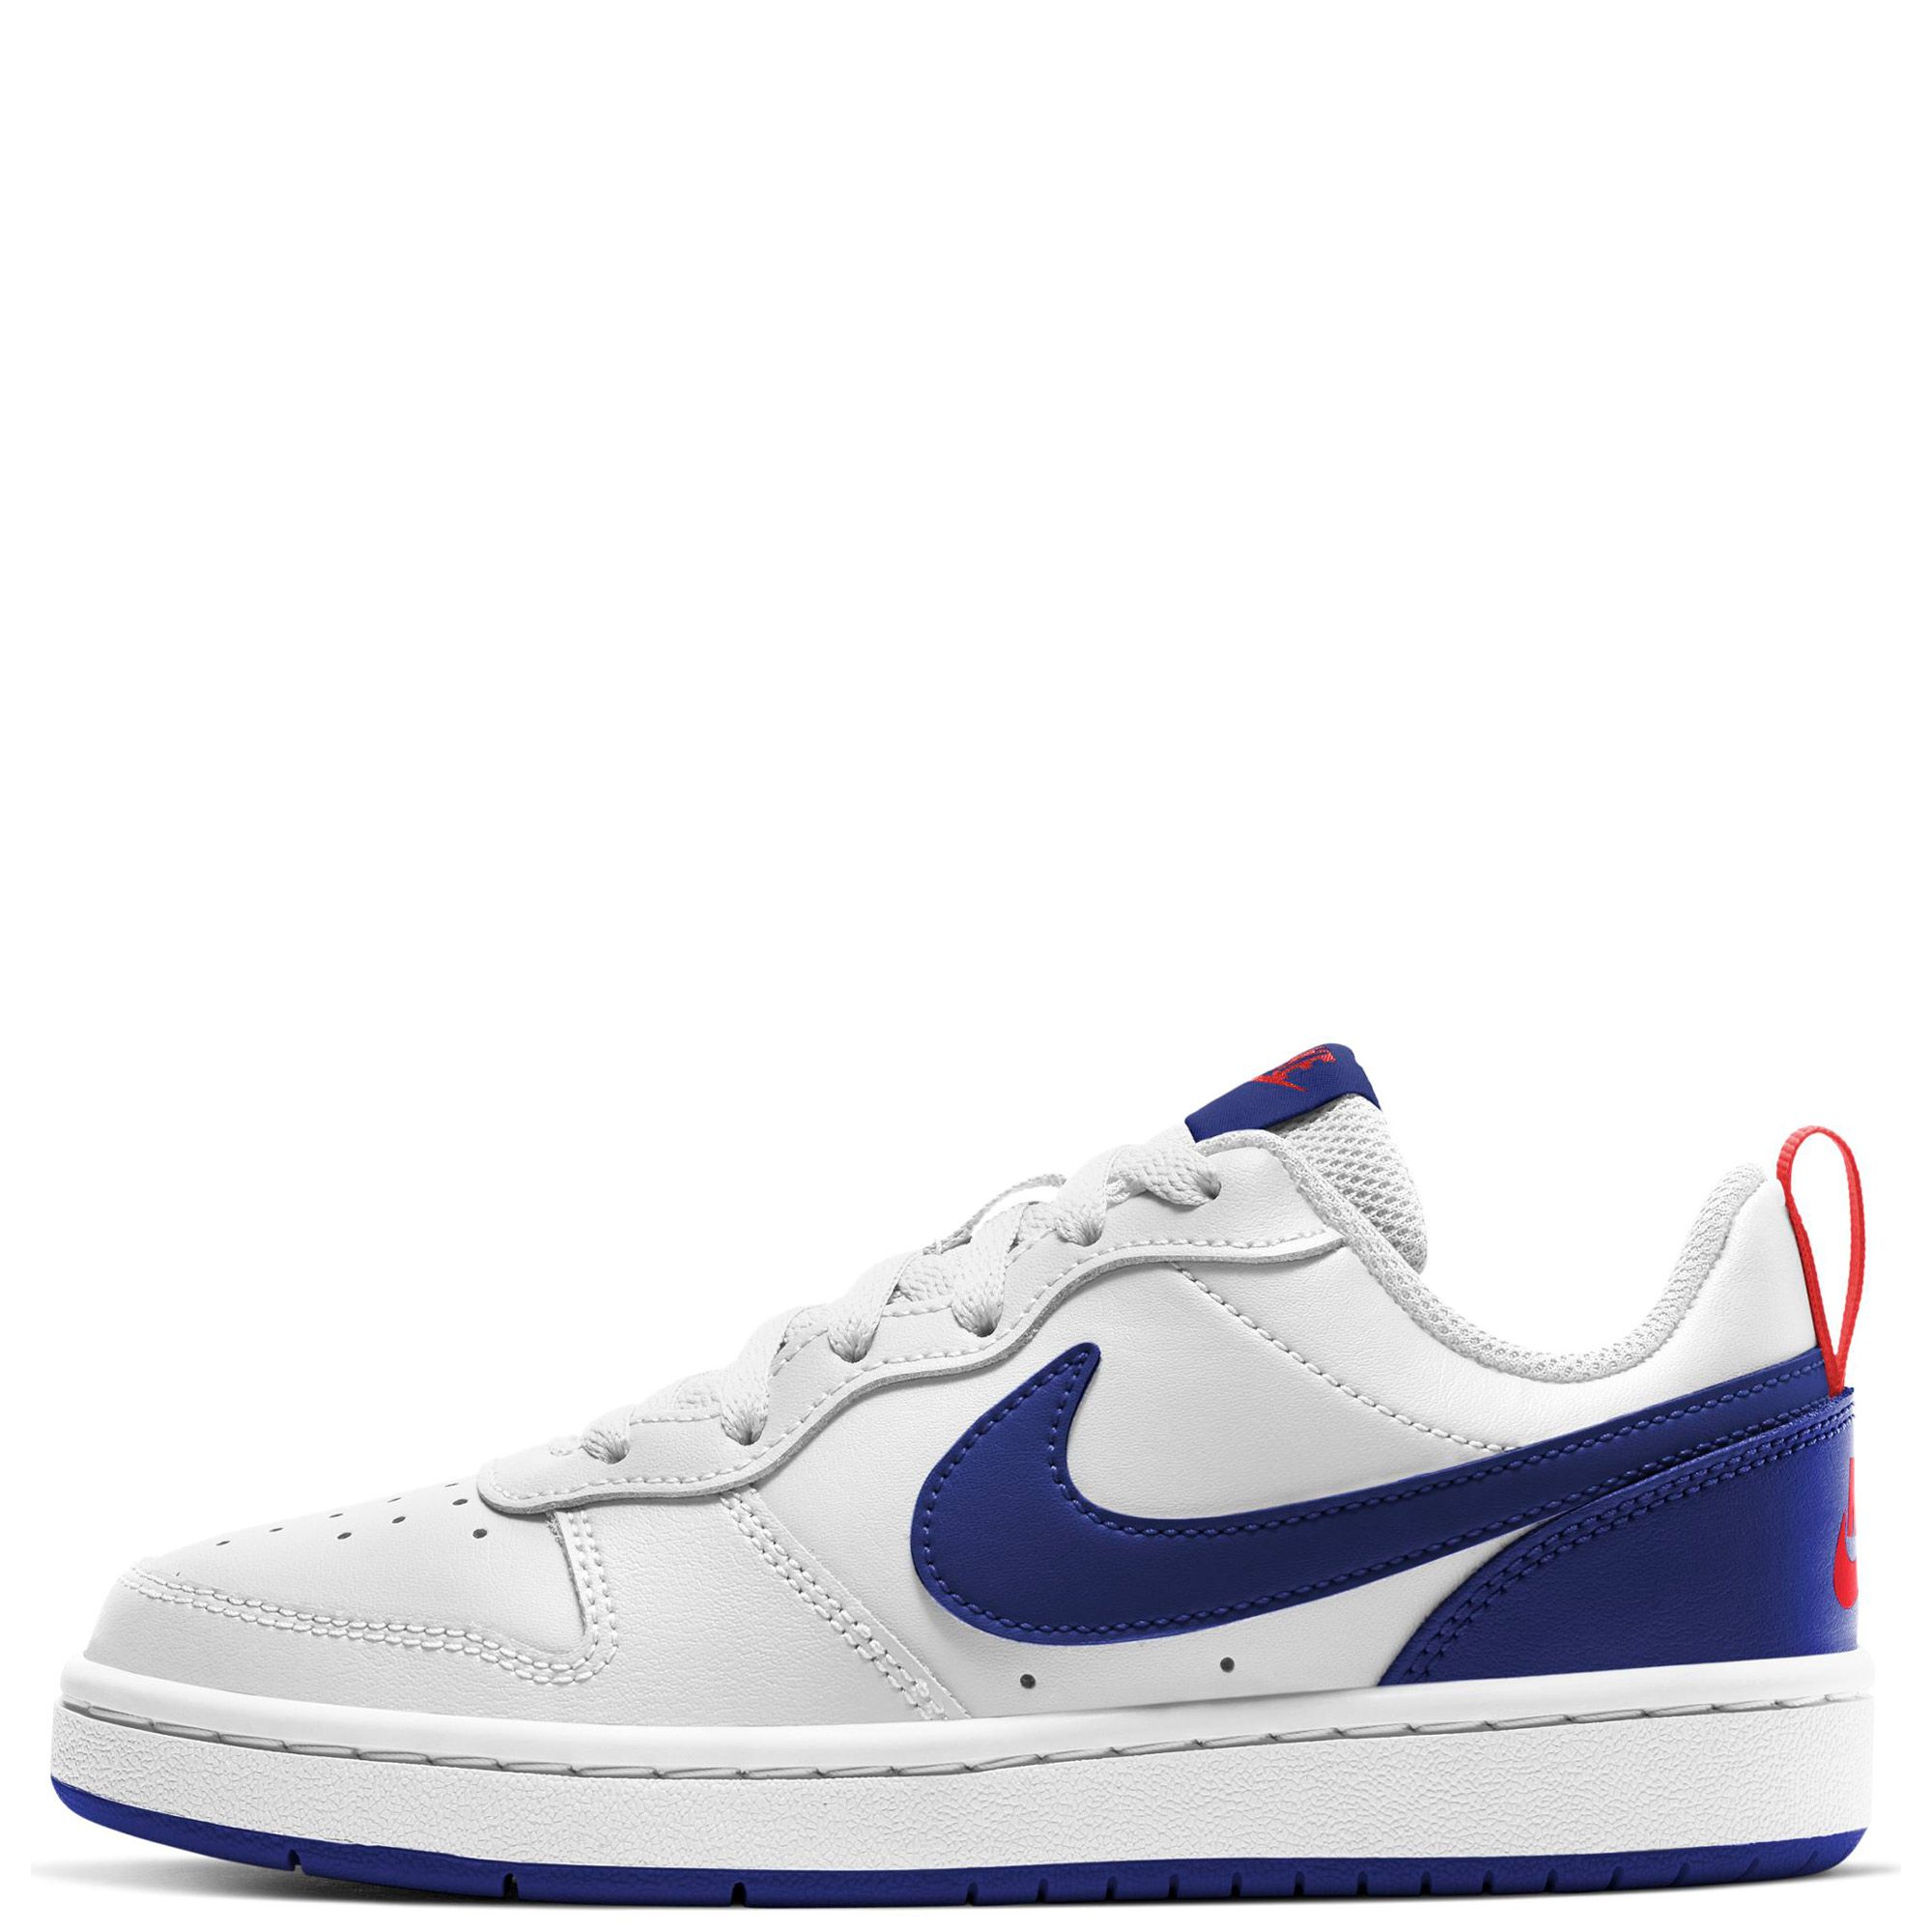  Nike Court Borough Low 2 (gs) Casual Fashion Sneaker Big Kids  Bq5448-100 Size 3.5